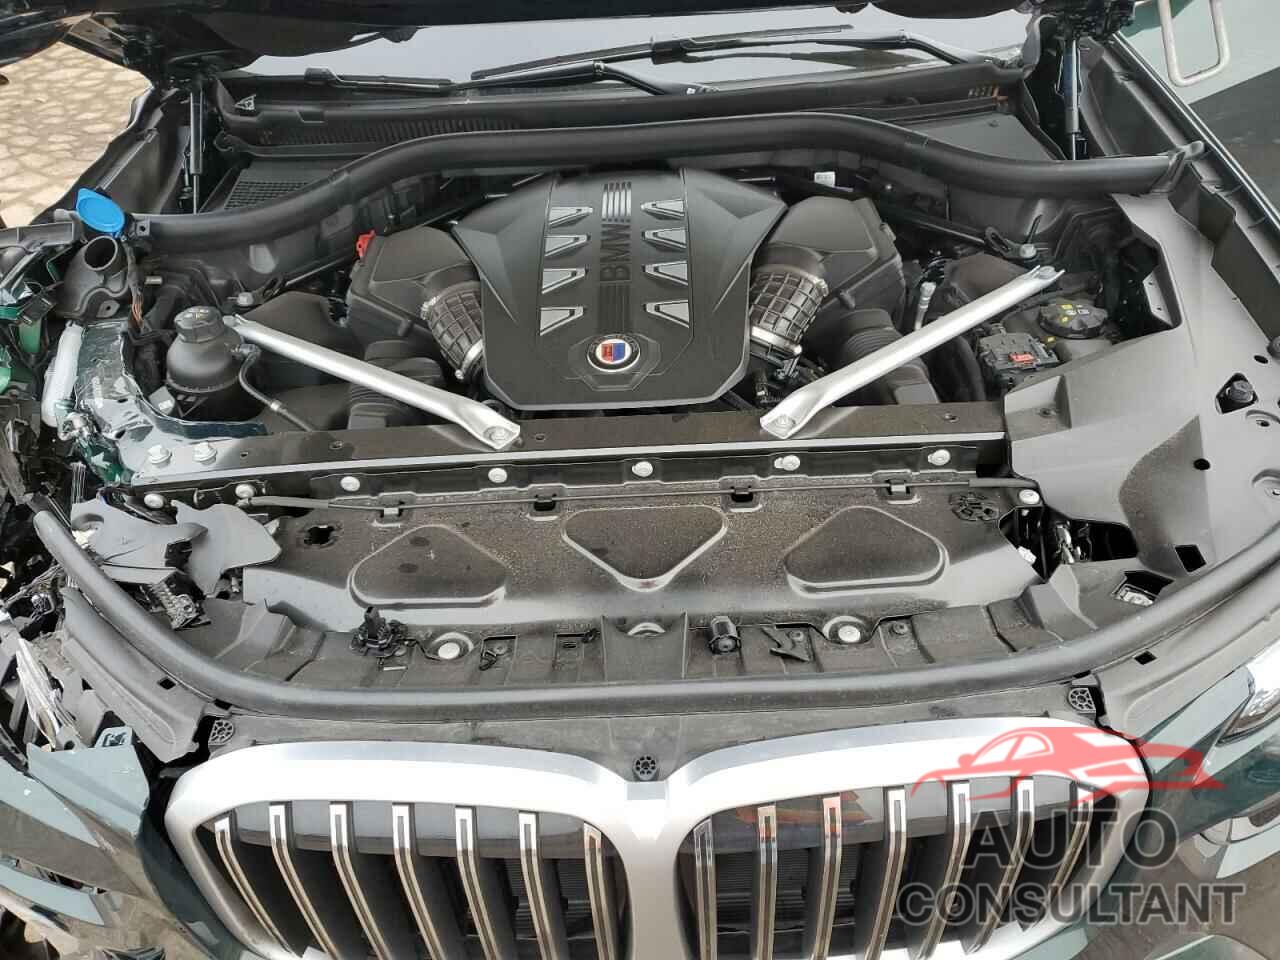 BMW X7 2024 - 5UX43EM15R9S83253